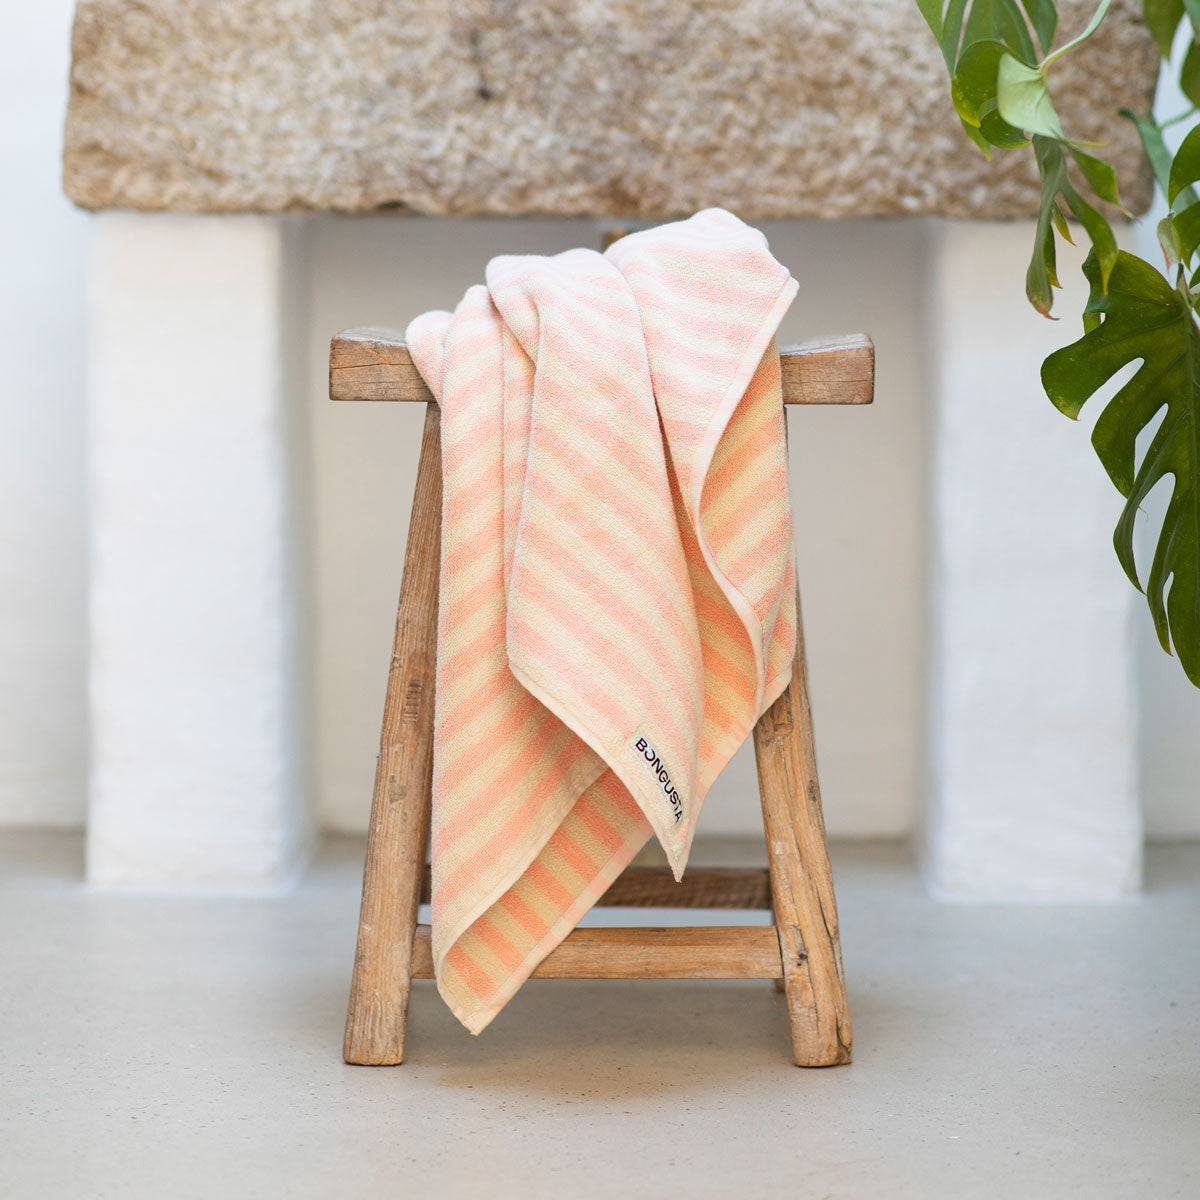 Bongusta Naram Towels - Tropical and Creme